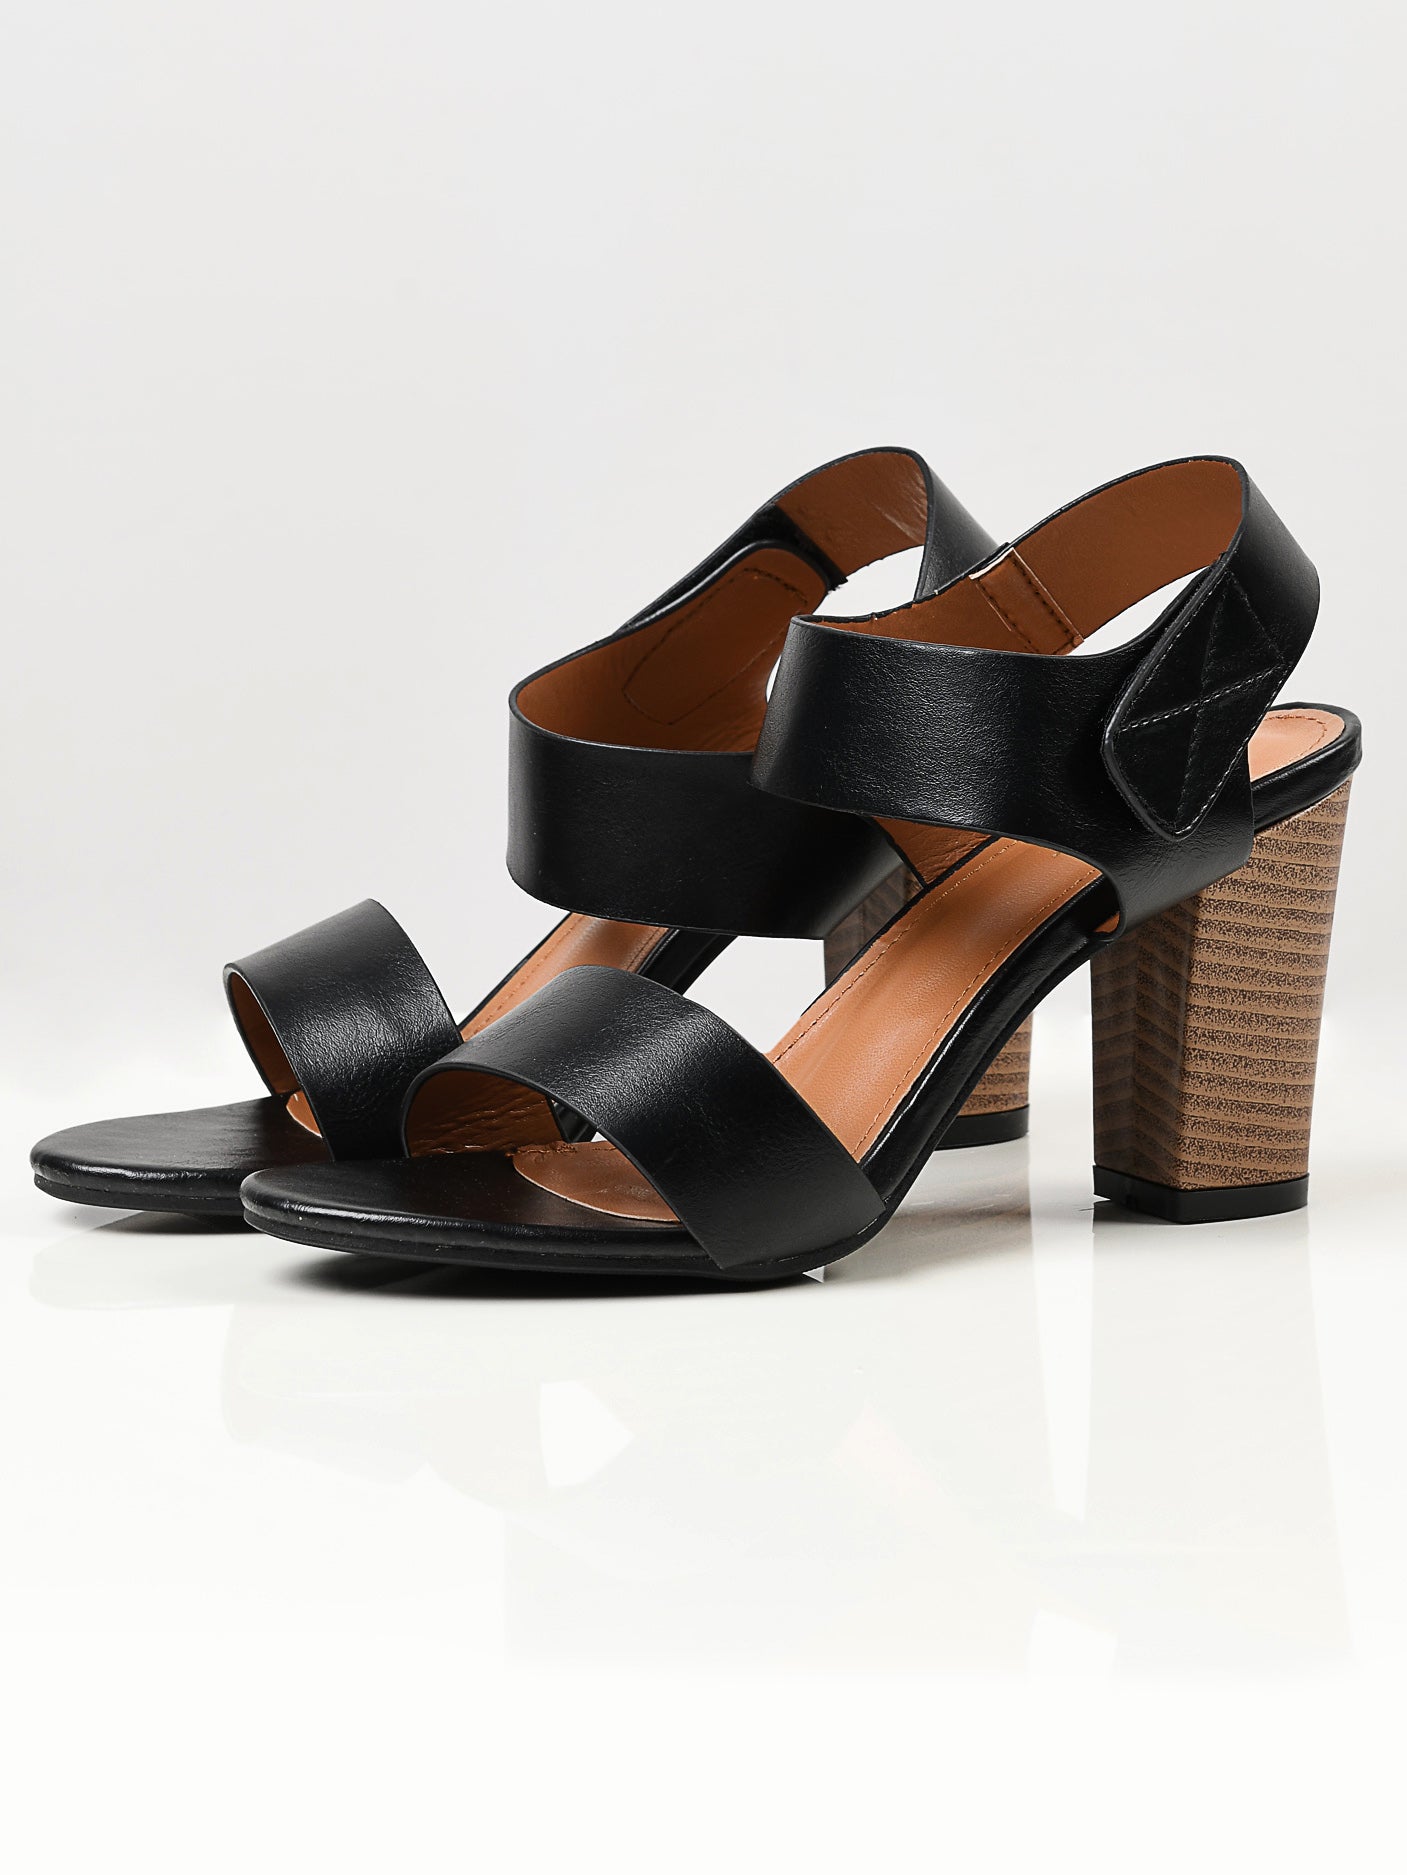 plain black block heels